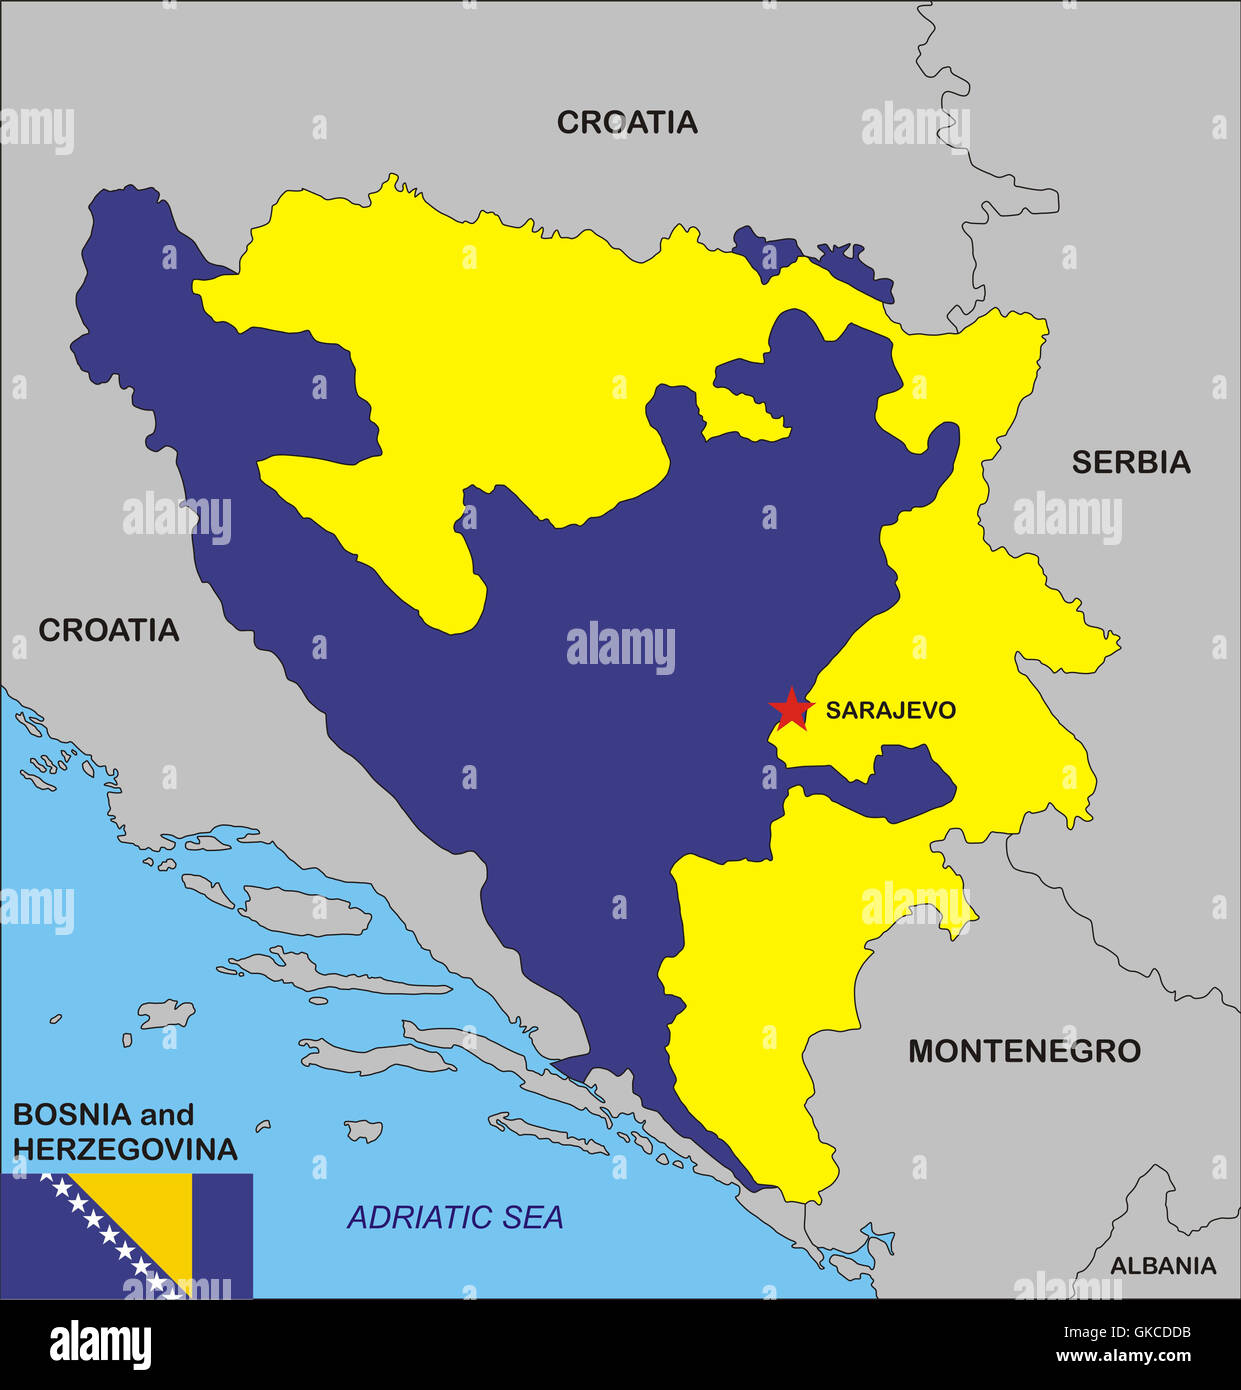 Bosnia and Herzegovina map Stock Photo